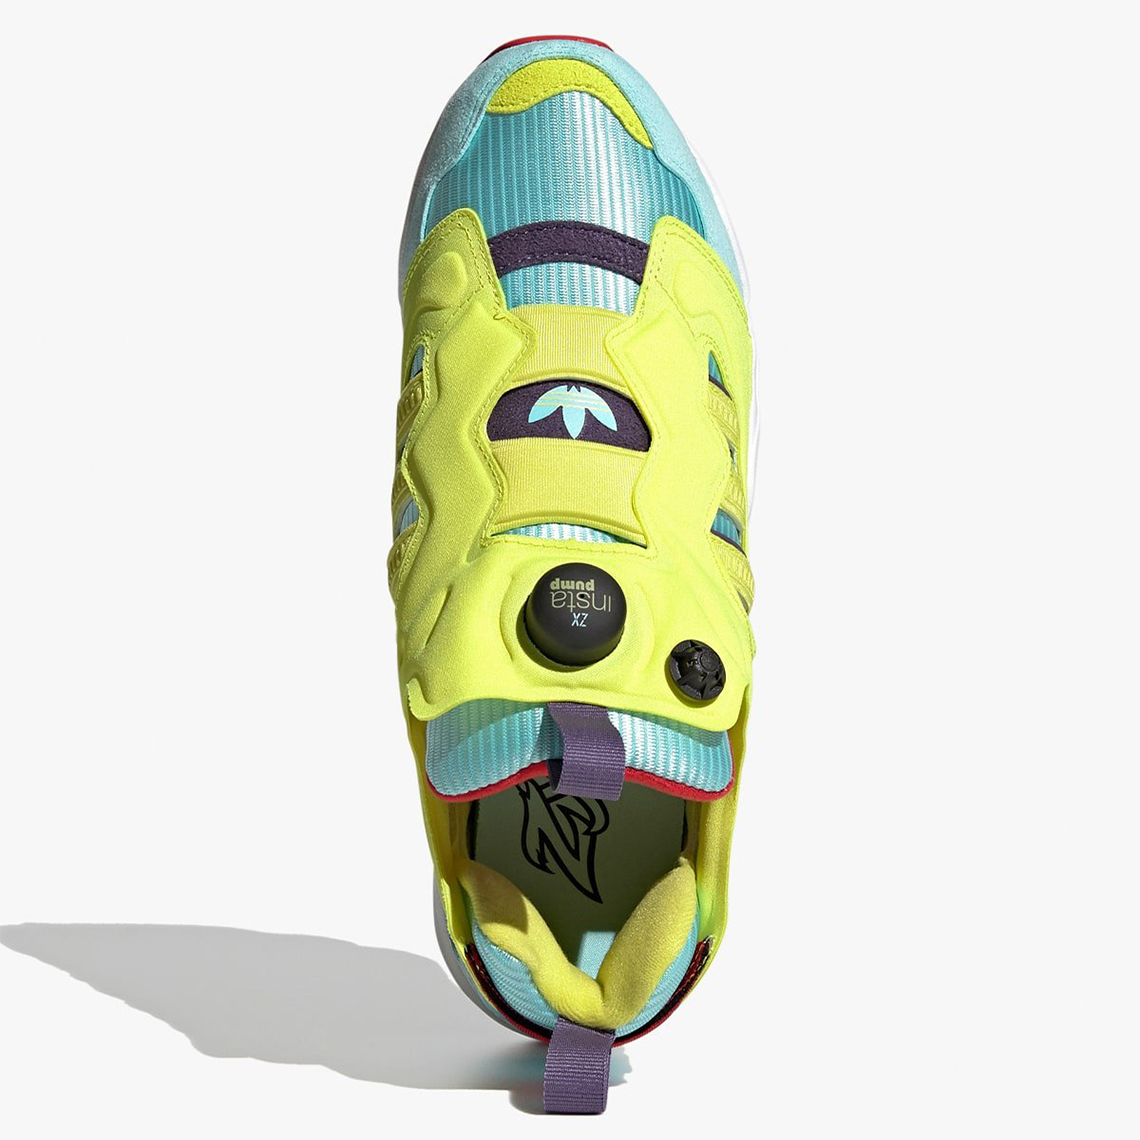 Reebok adidas ZX Fury FZ1877 Release Info | SneakerNews.com